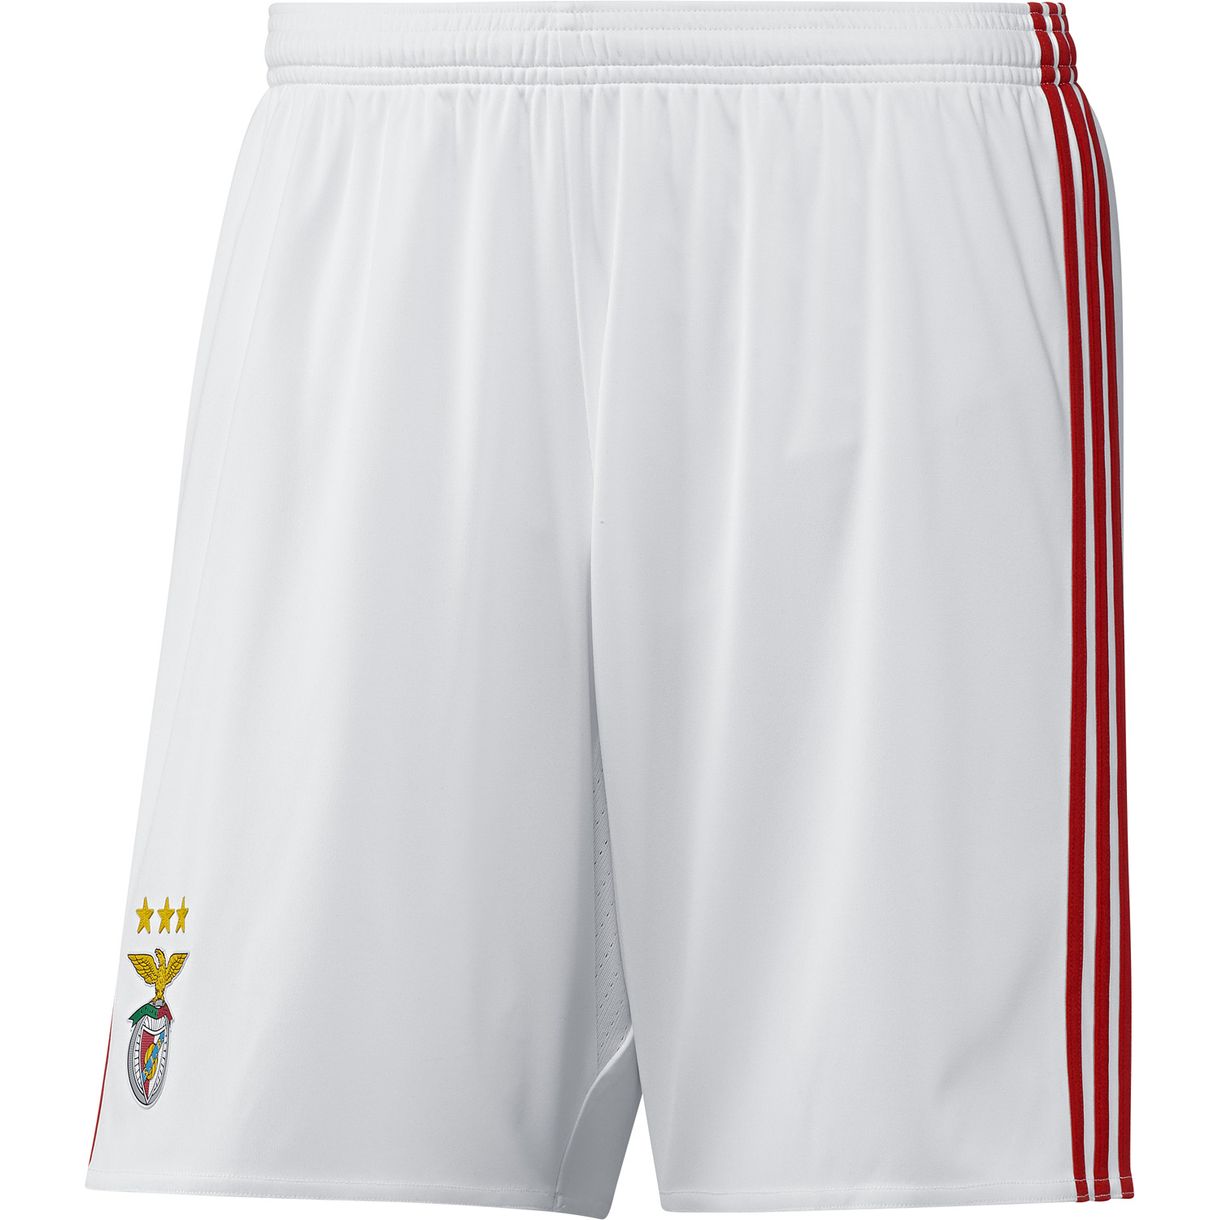 Benfica 2016-2017 Home Shorts (White) - Kids